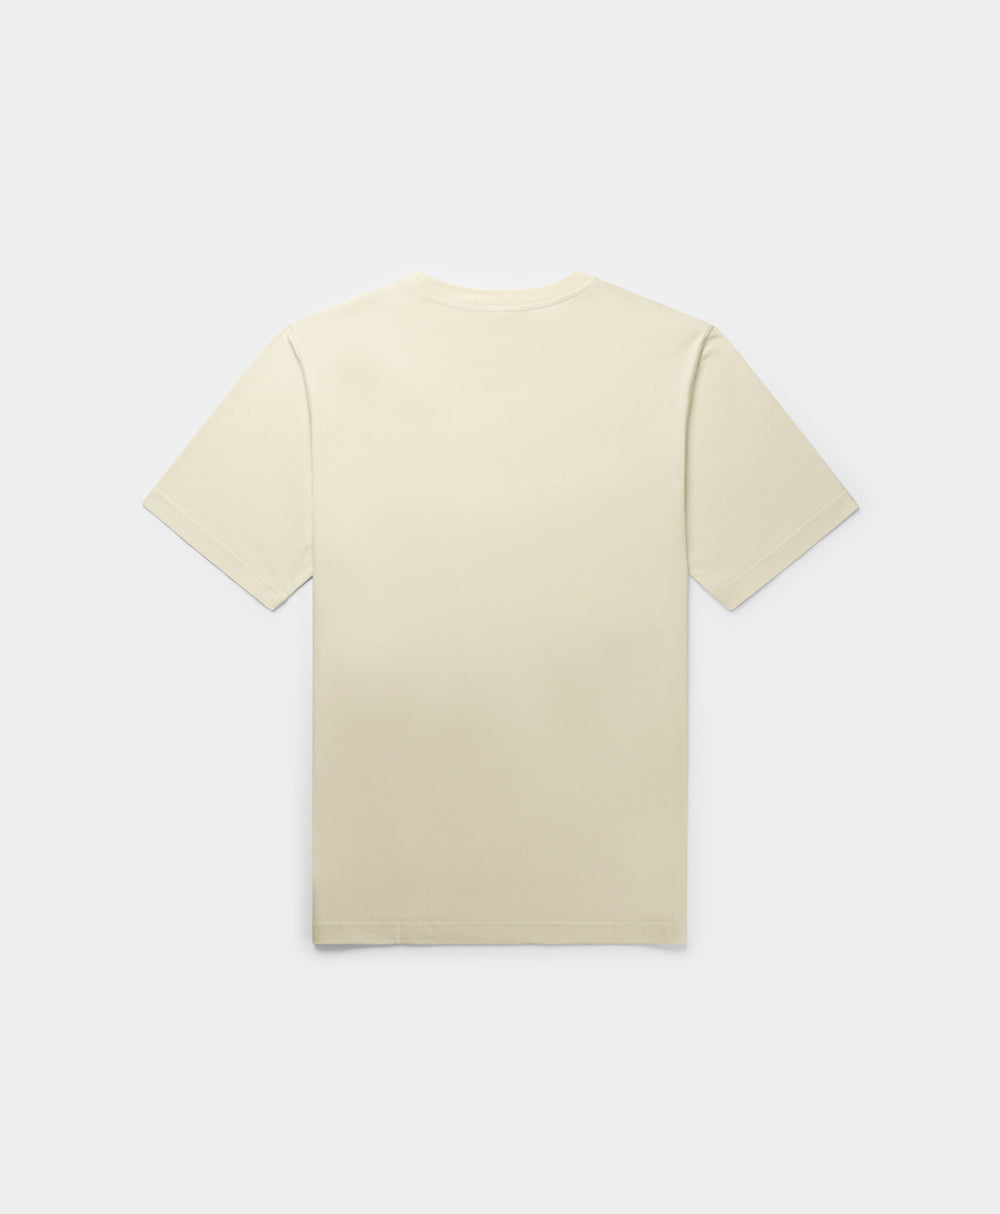 DP - Birch White Alias T-Shirt - Packshot - Rear